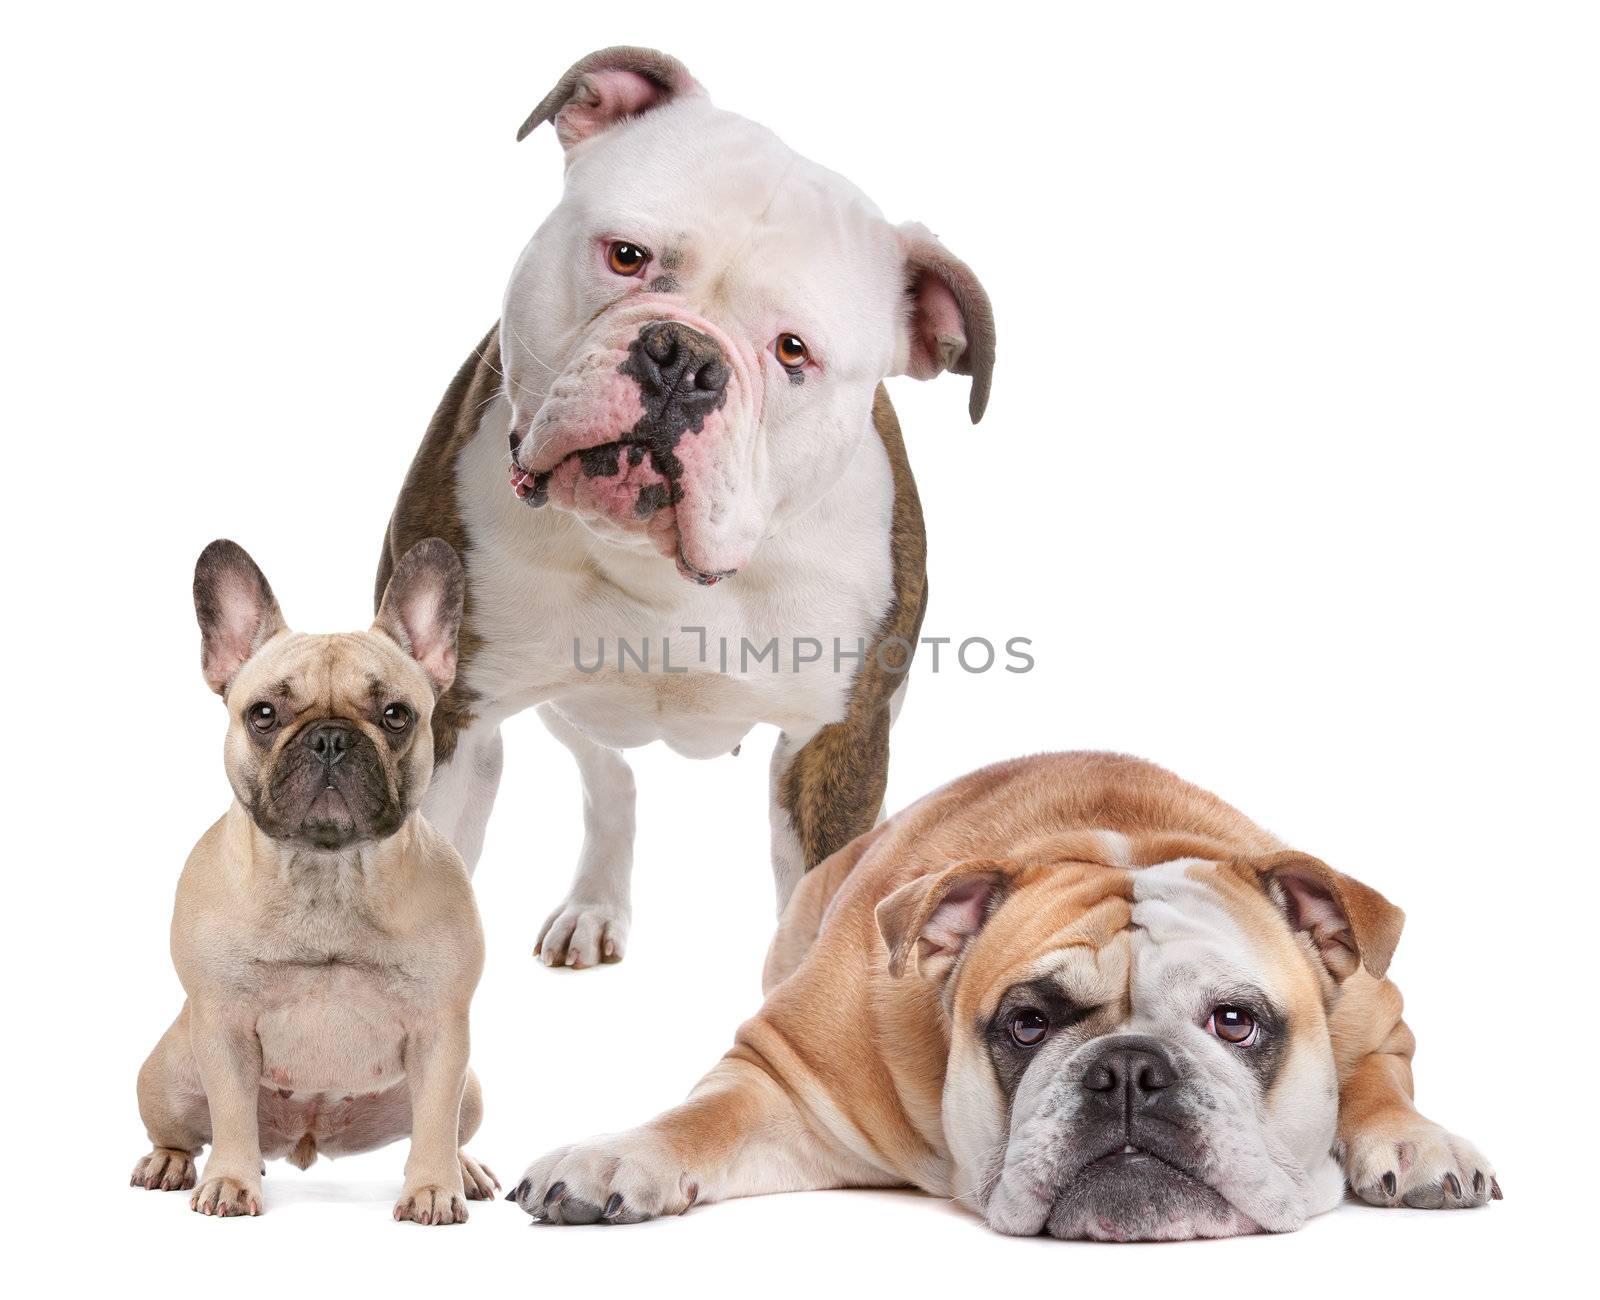 The Bulldog Family by eriklam